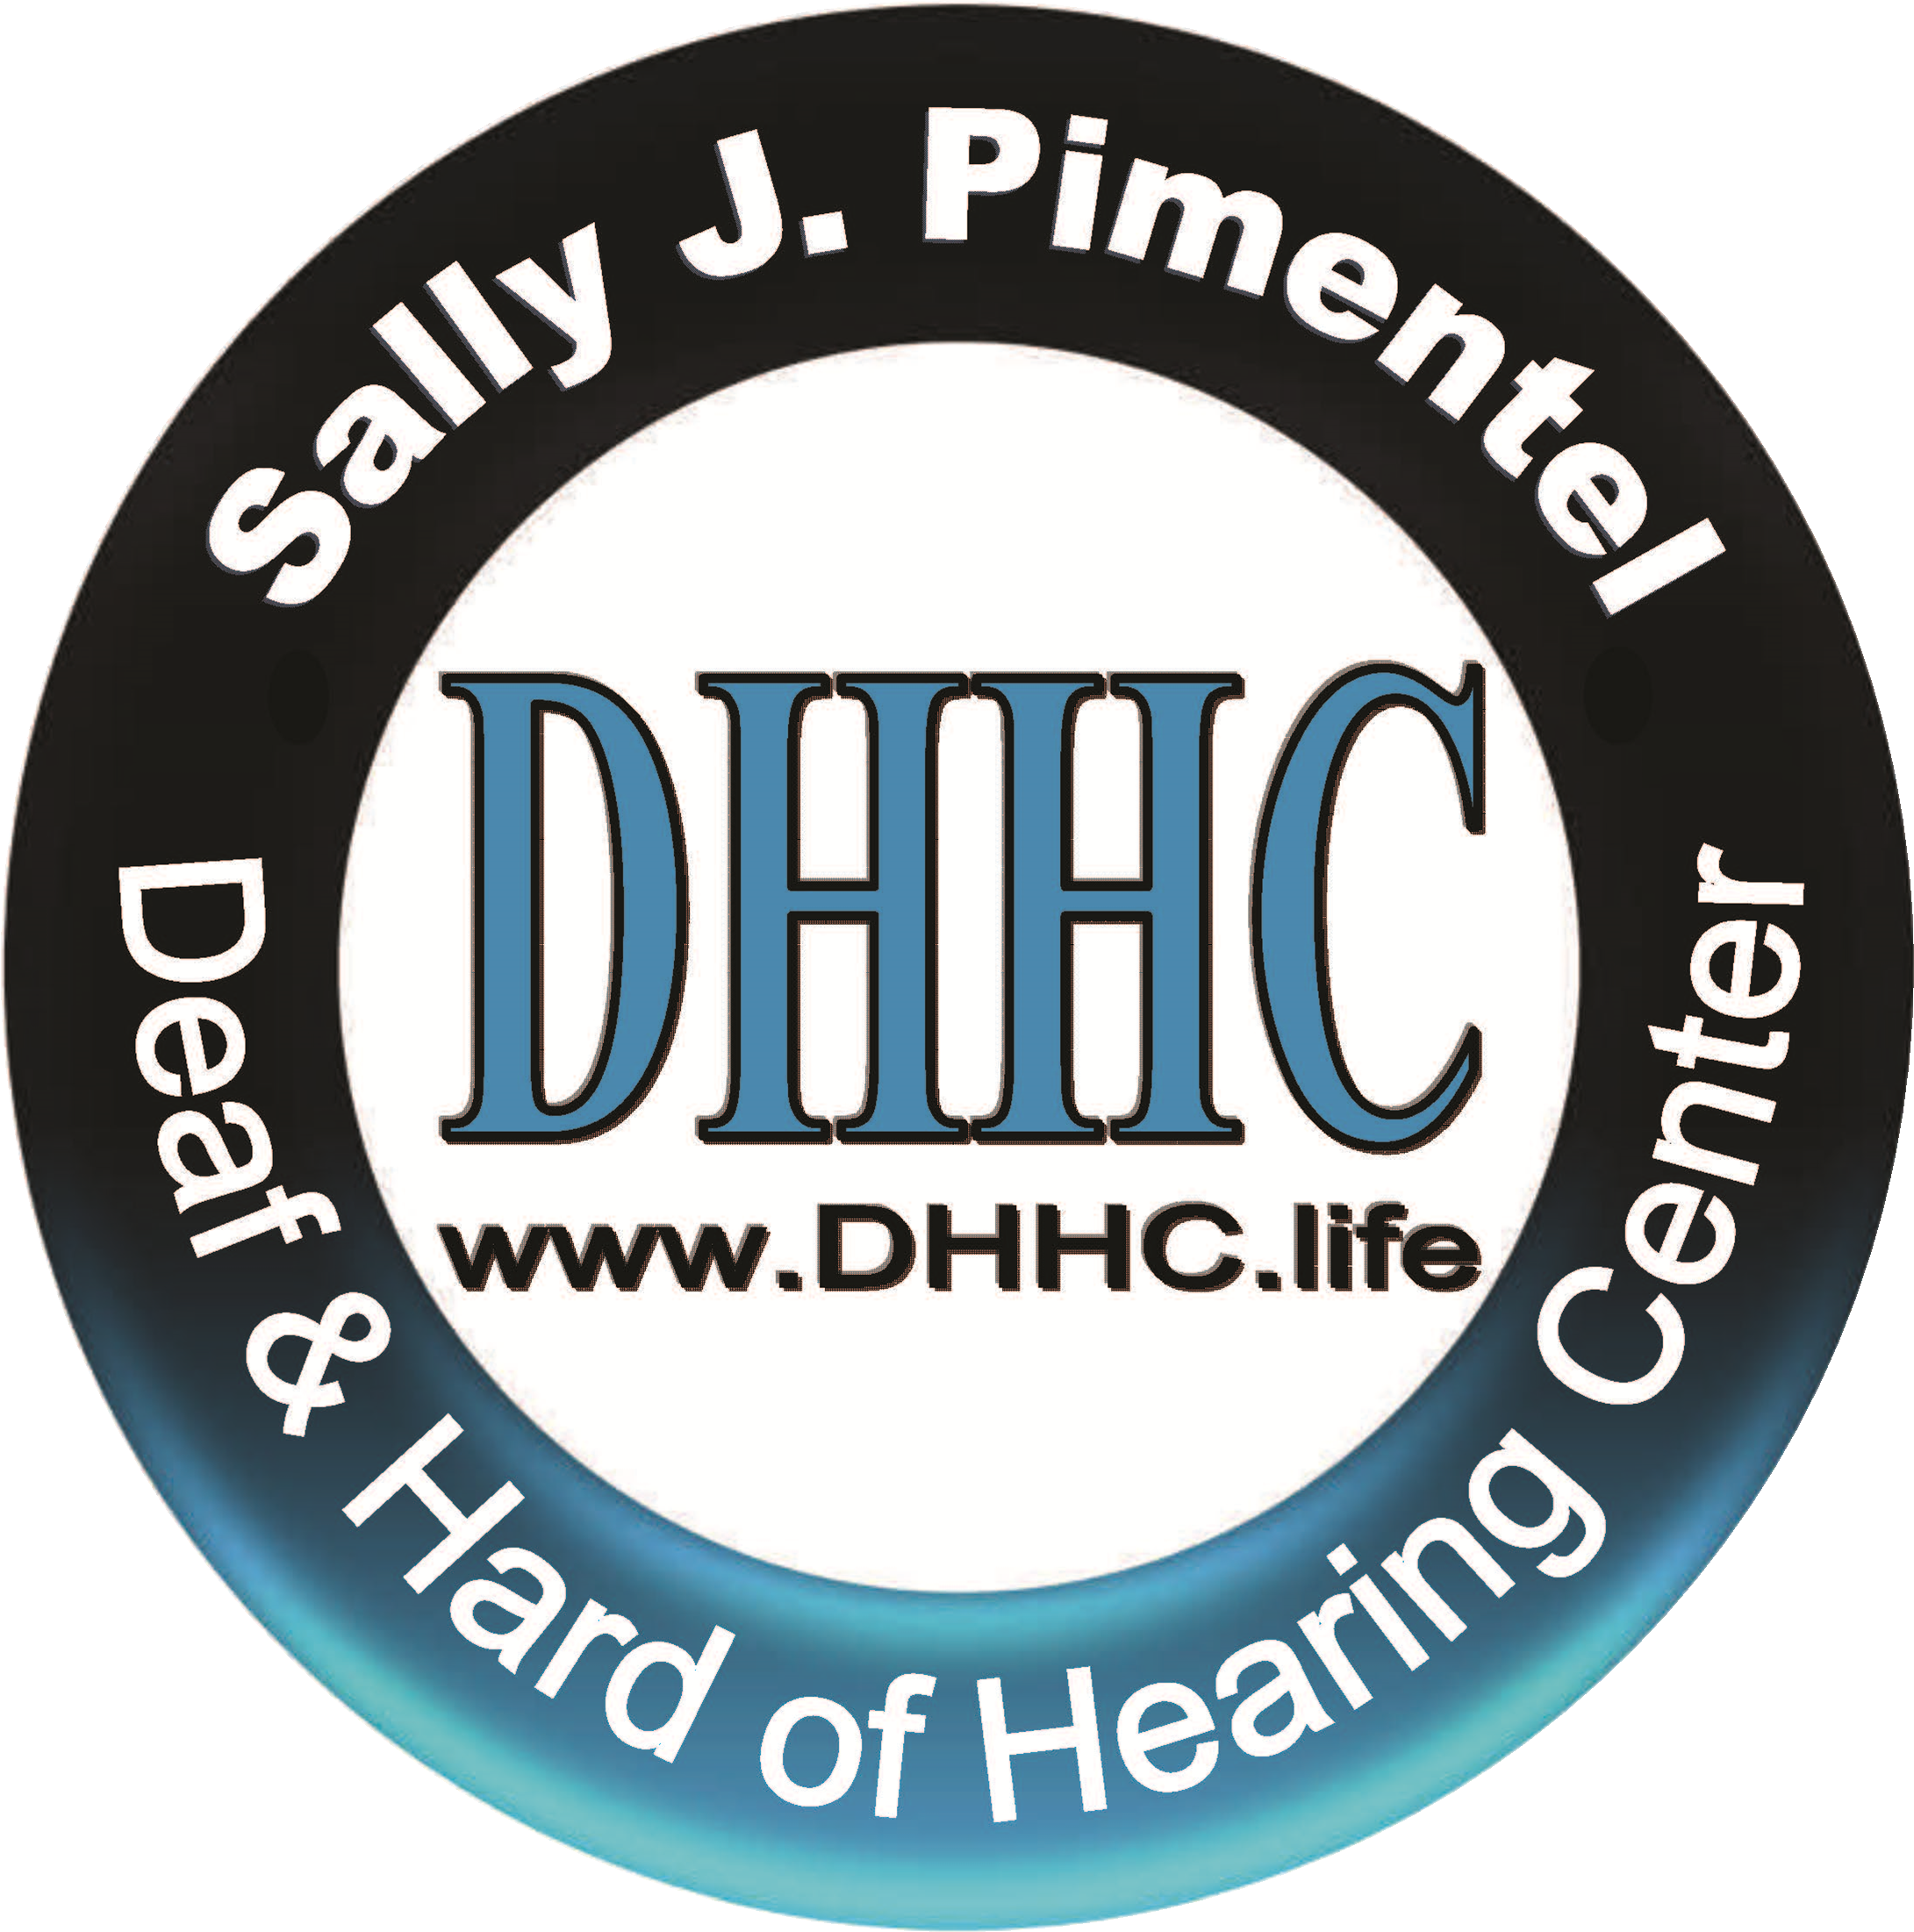 Sally J. Pimentel Deaf & Hard of Hearing Center, The